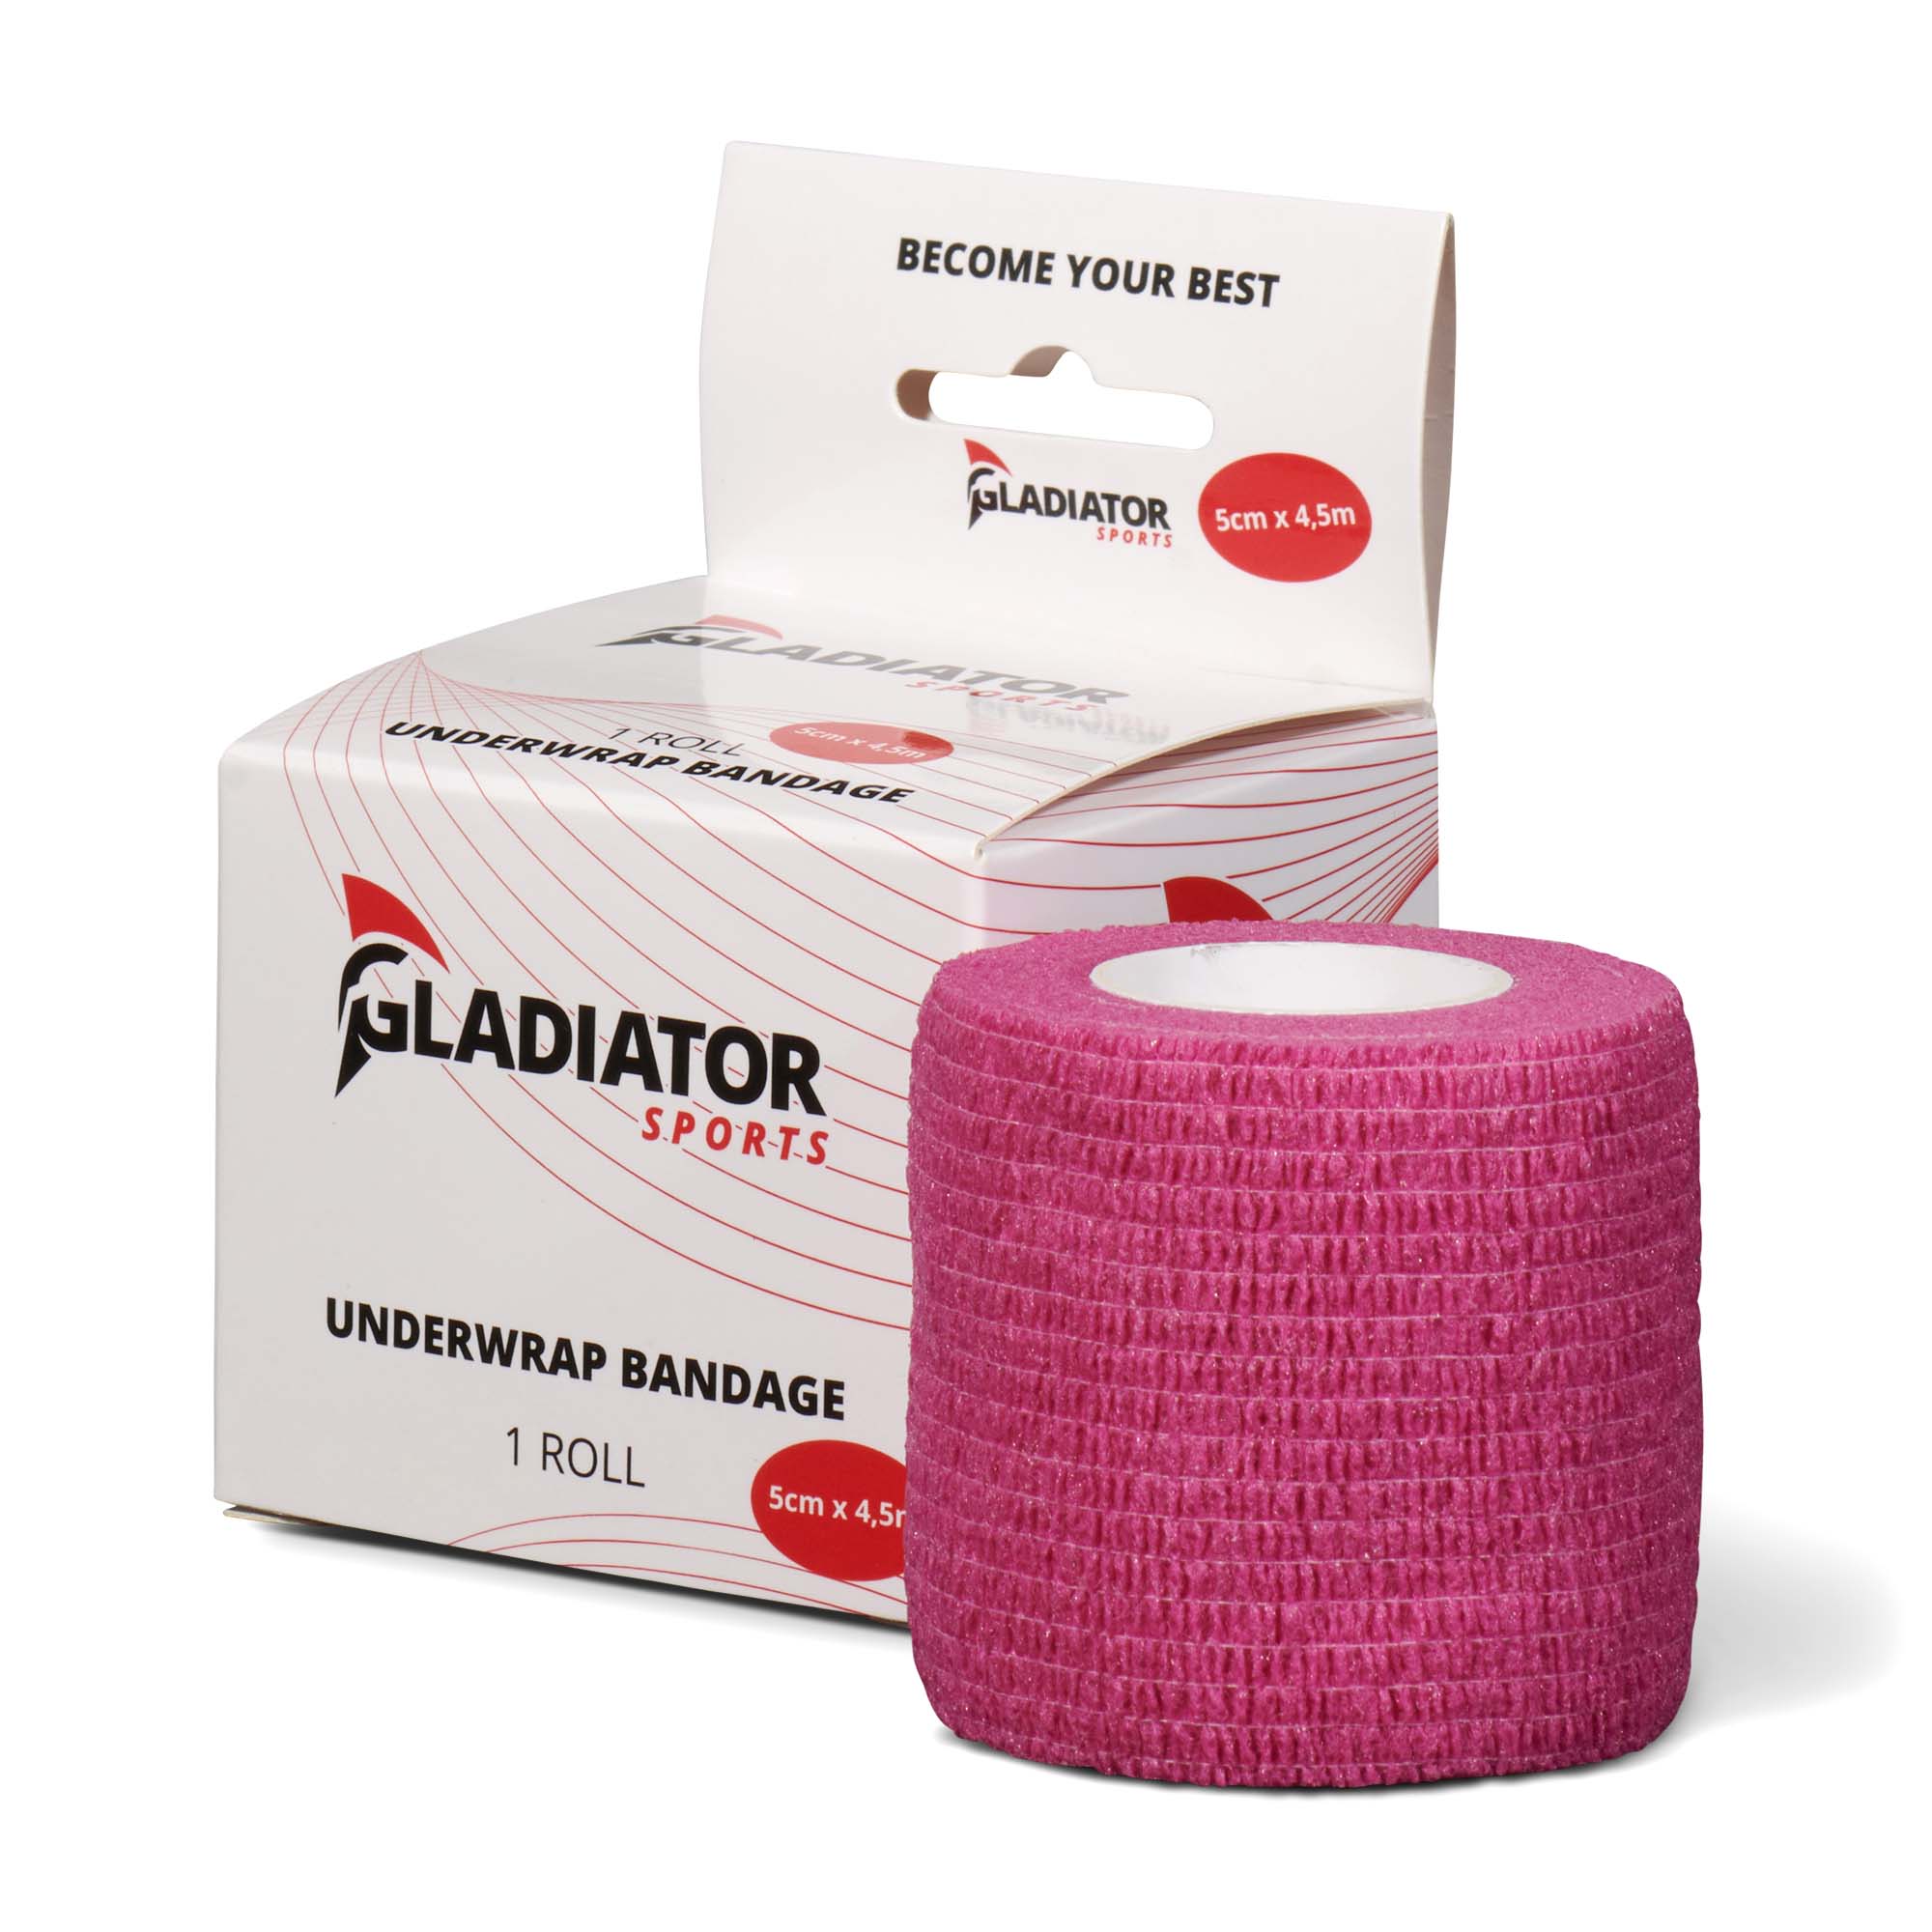 gladiator sports underwrap bandage per roll pink with box